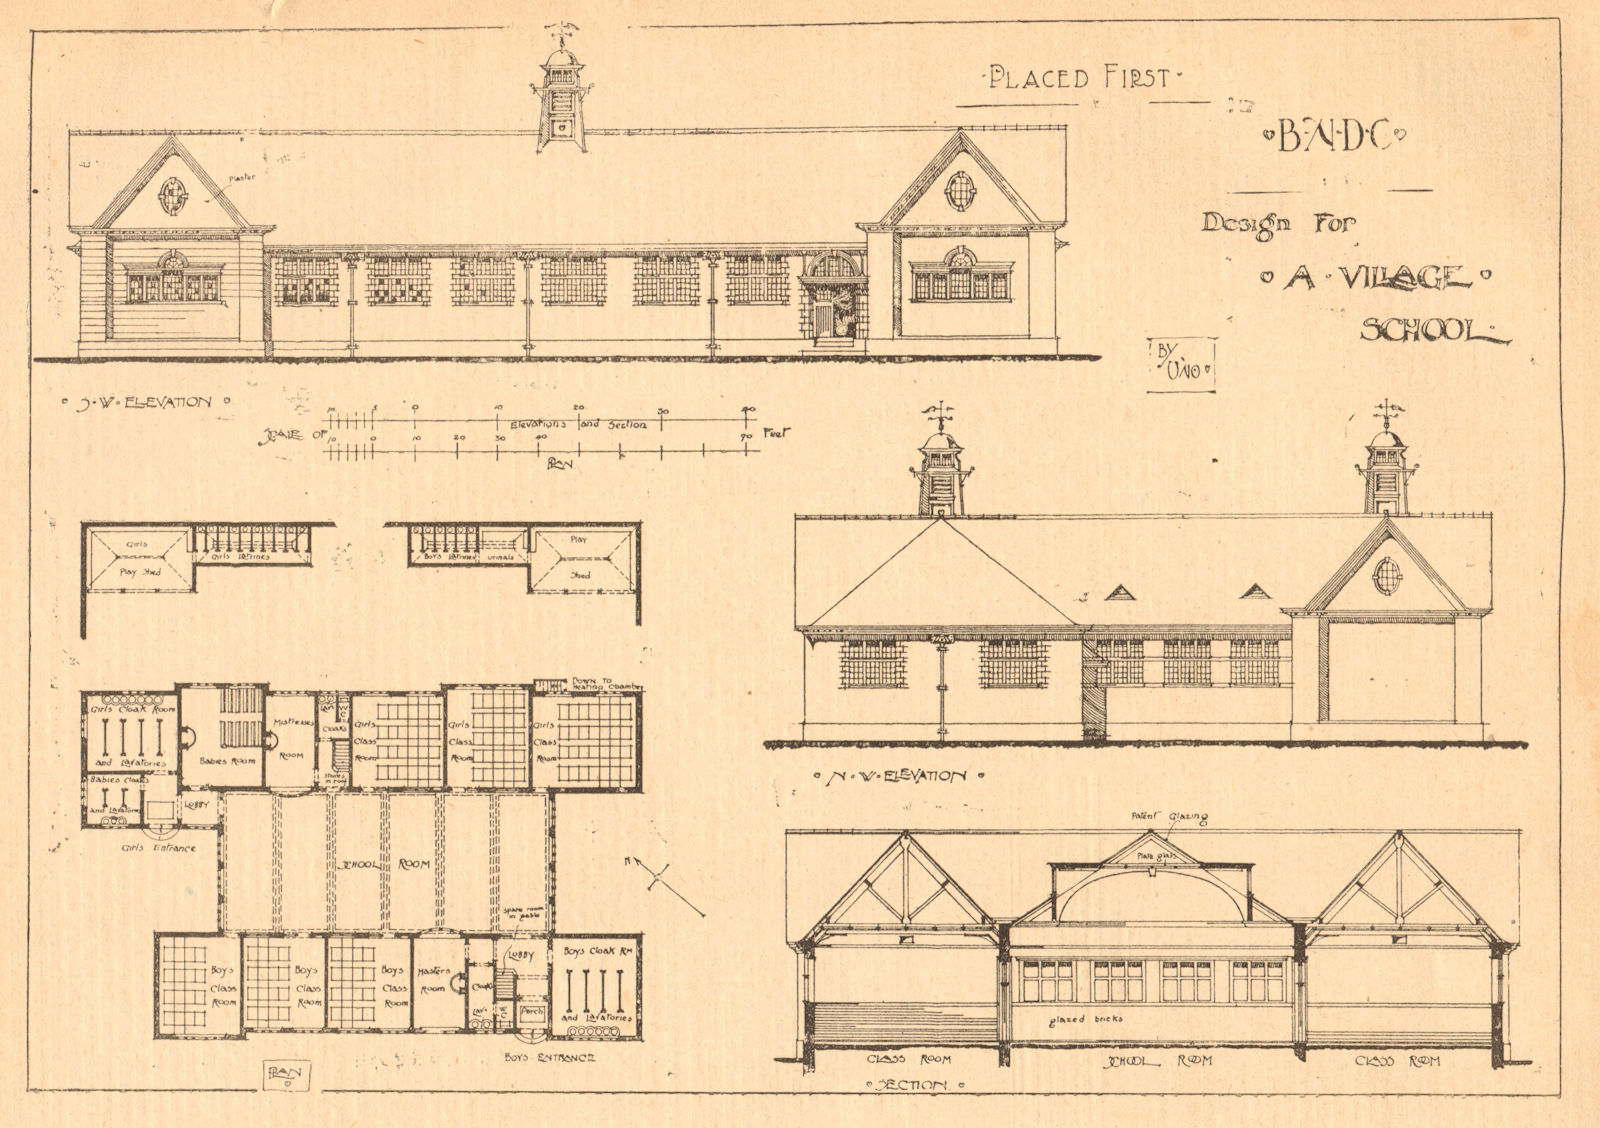 Design for a village school. NW elevation, SW elevation, plan 1902 old print